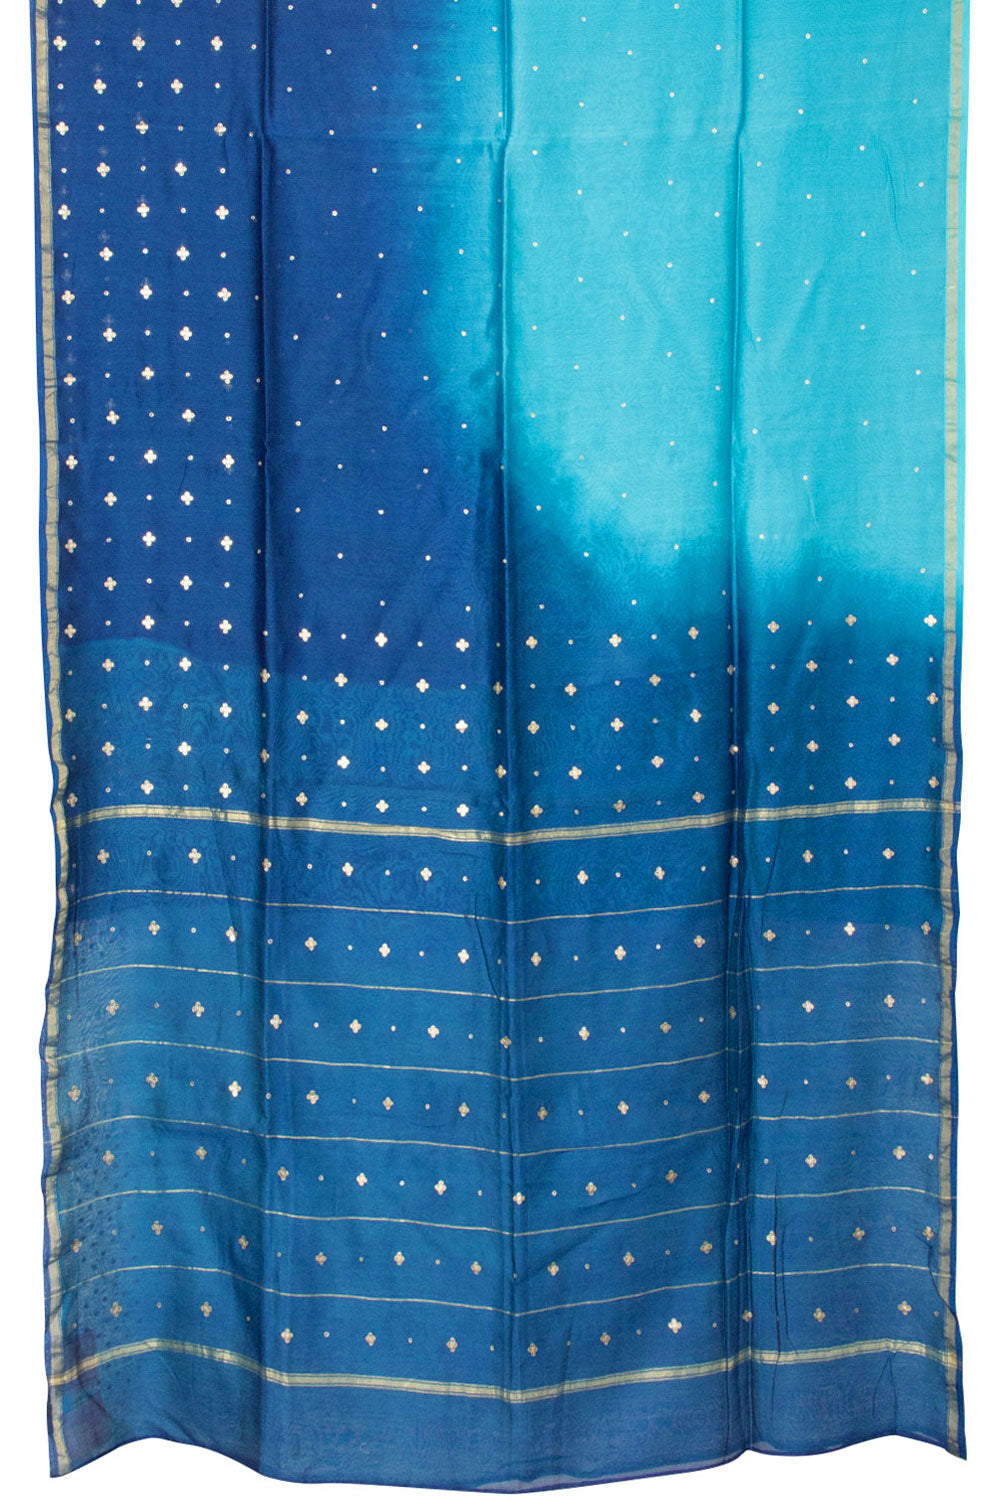 Dual Shade Blue Handwoven Chanderi Silk Cotton Saree 10066023